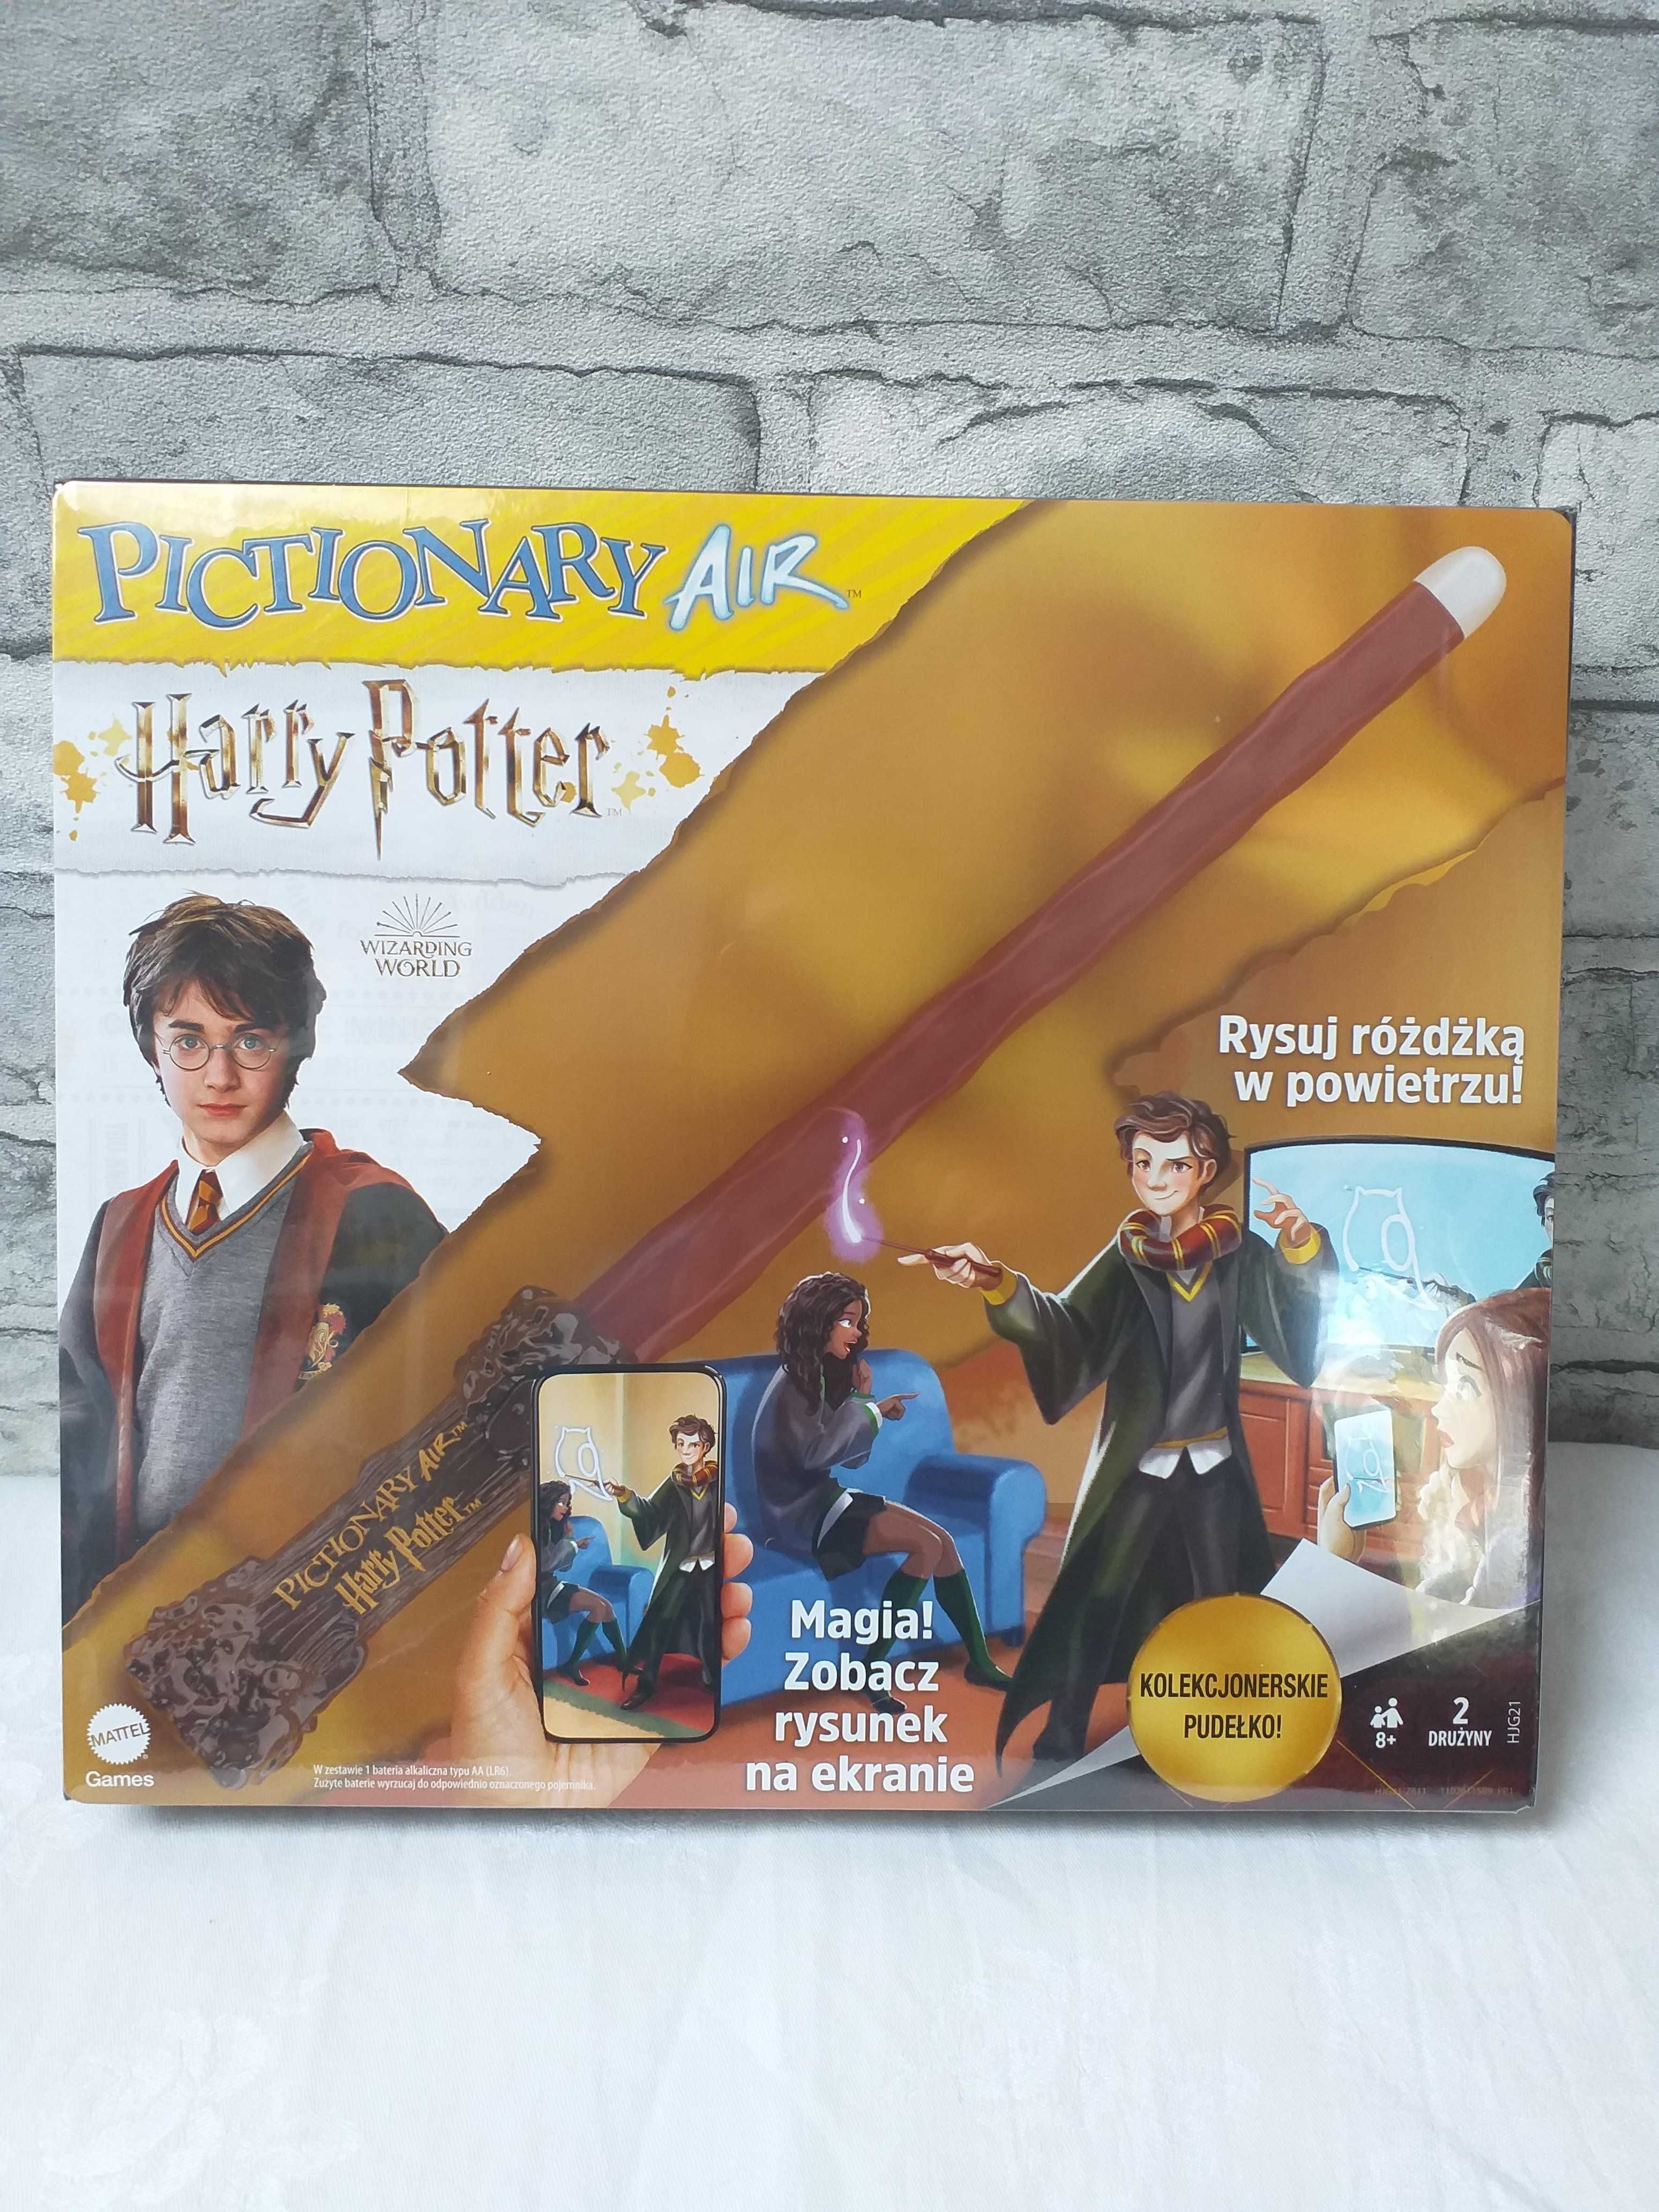 Gra Harry Potter Pictionary Air